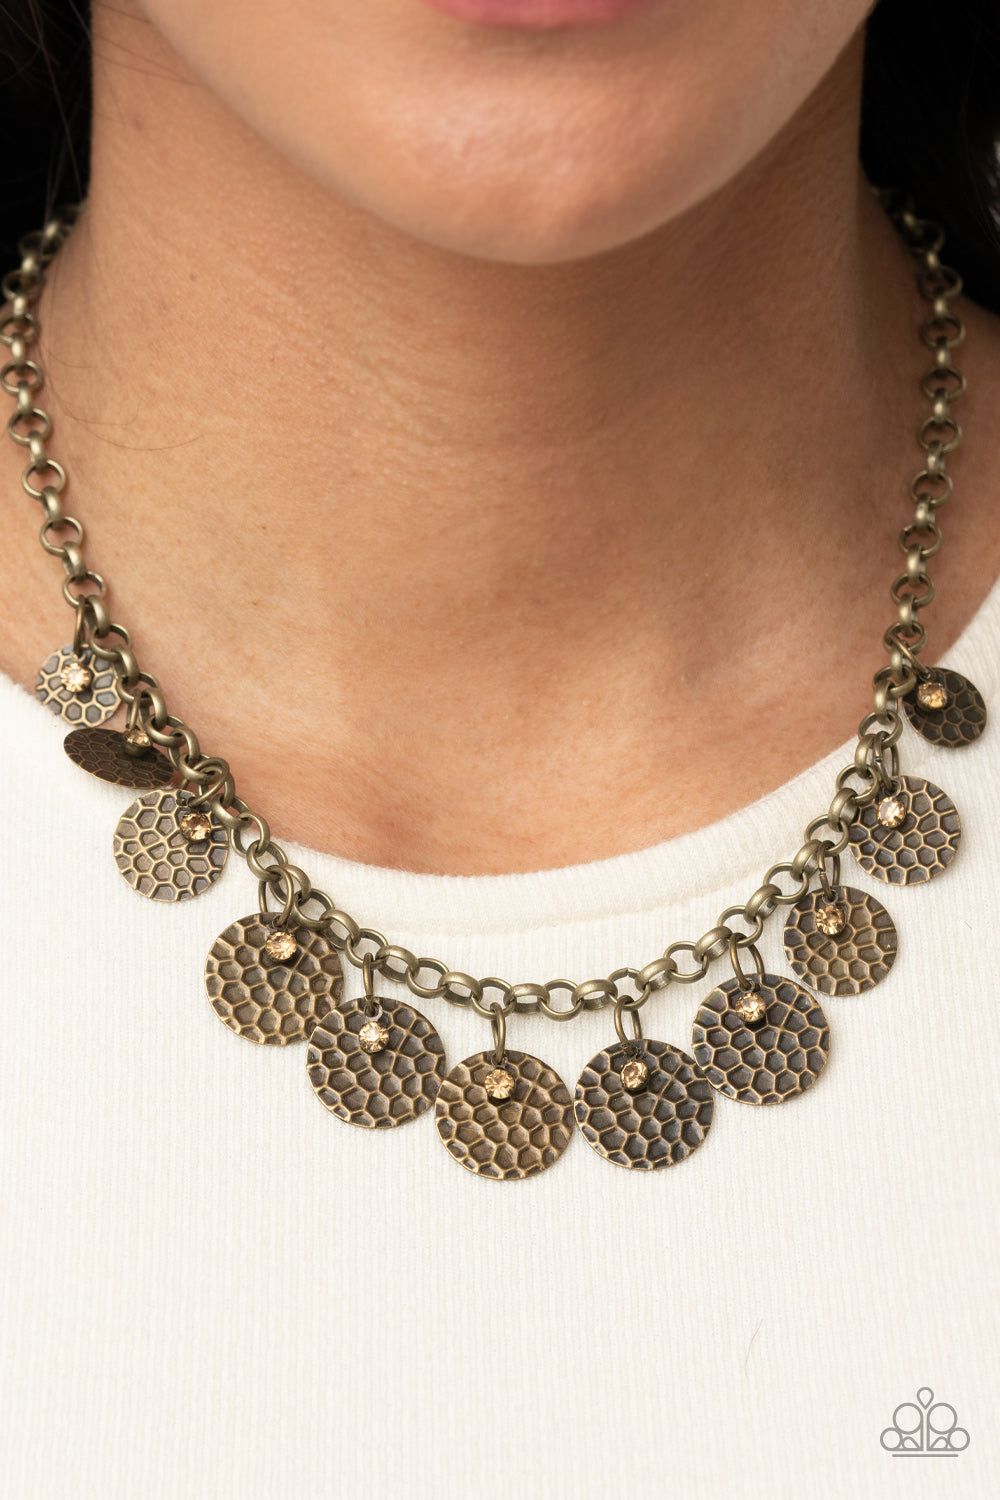 PRE-ORDER - Paparazzi Delightfully Dappled - Brass - Necklace & Earrings - $5 Jewelry with Ashley Swint